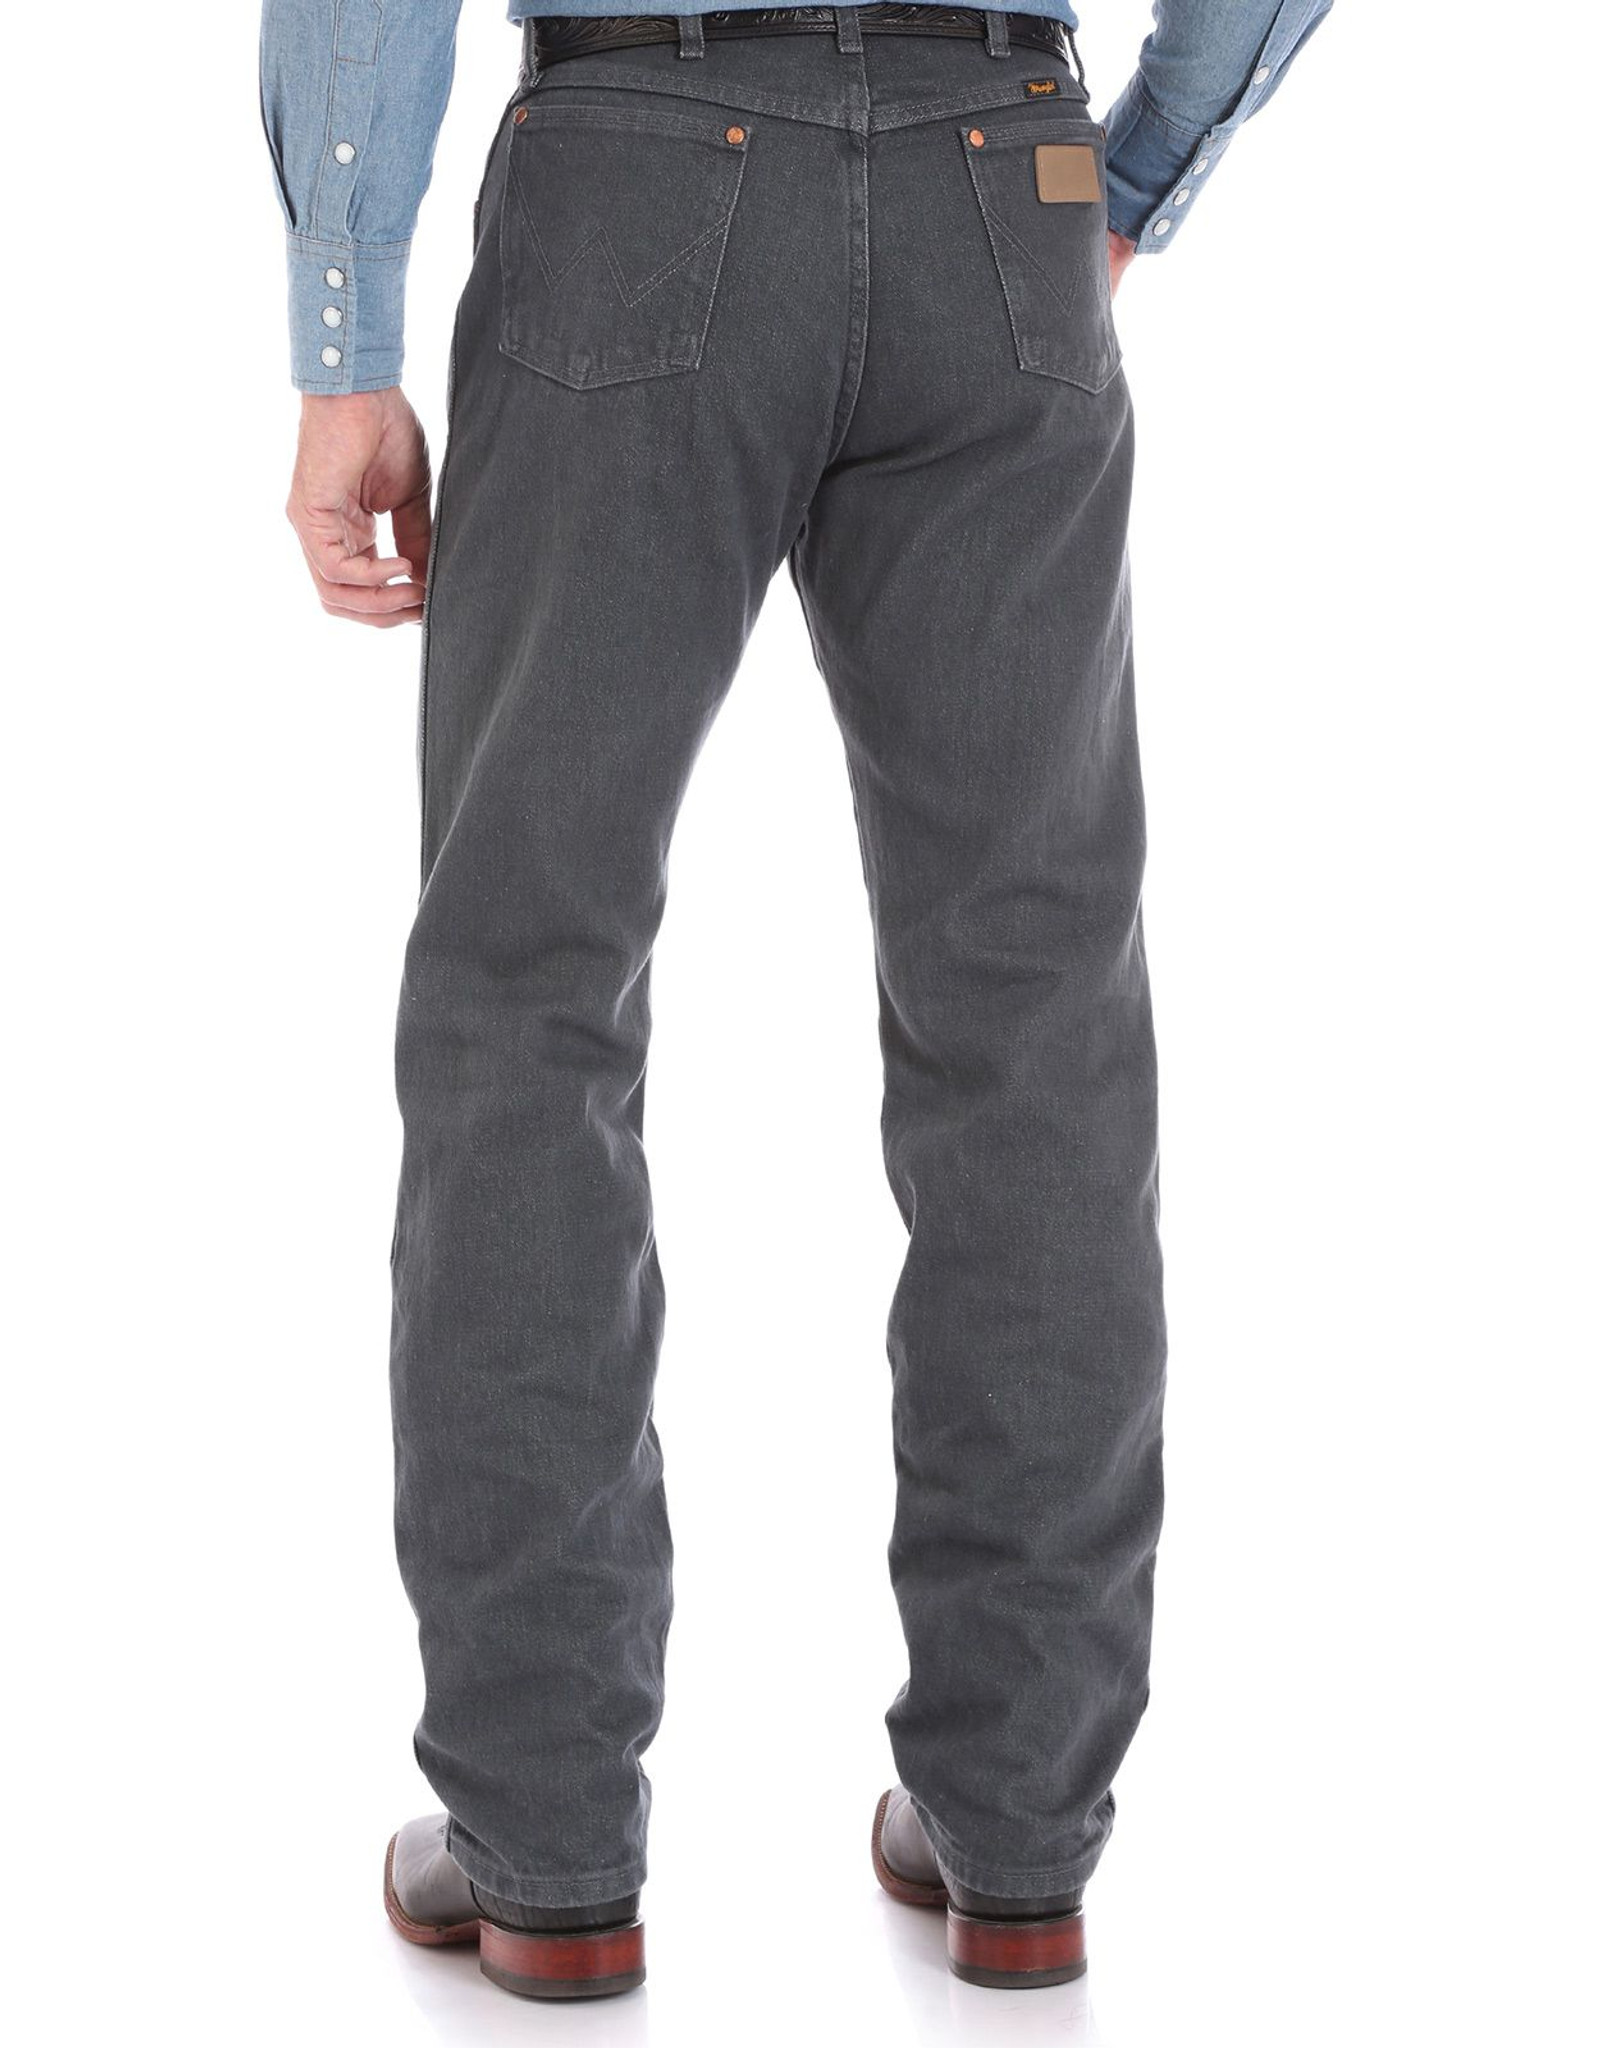 Wrangler Men's 13 Original High Rise Regular Fit Boot Cut Jeans - Prewashed Charcoal